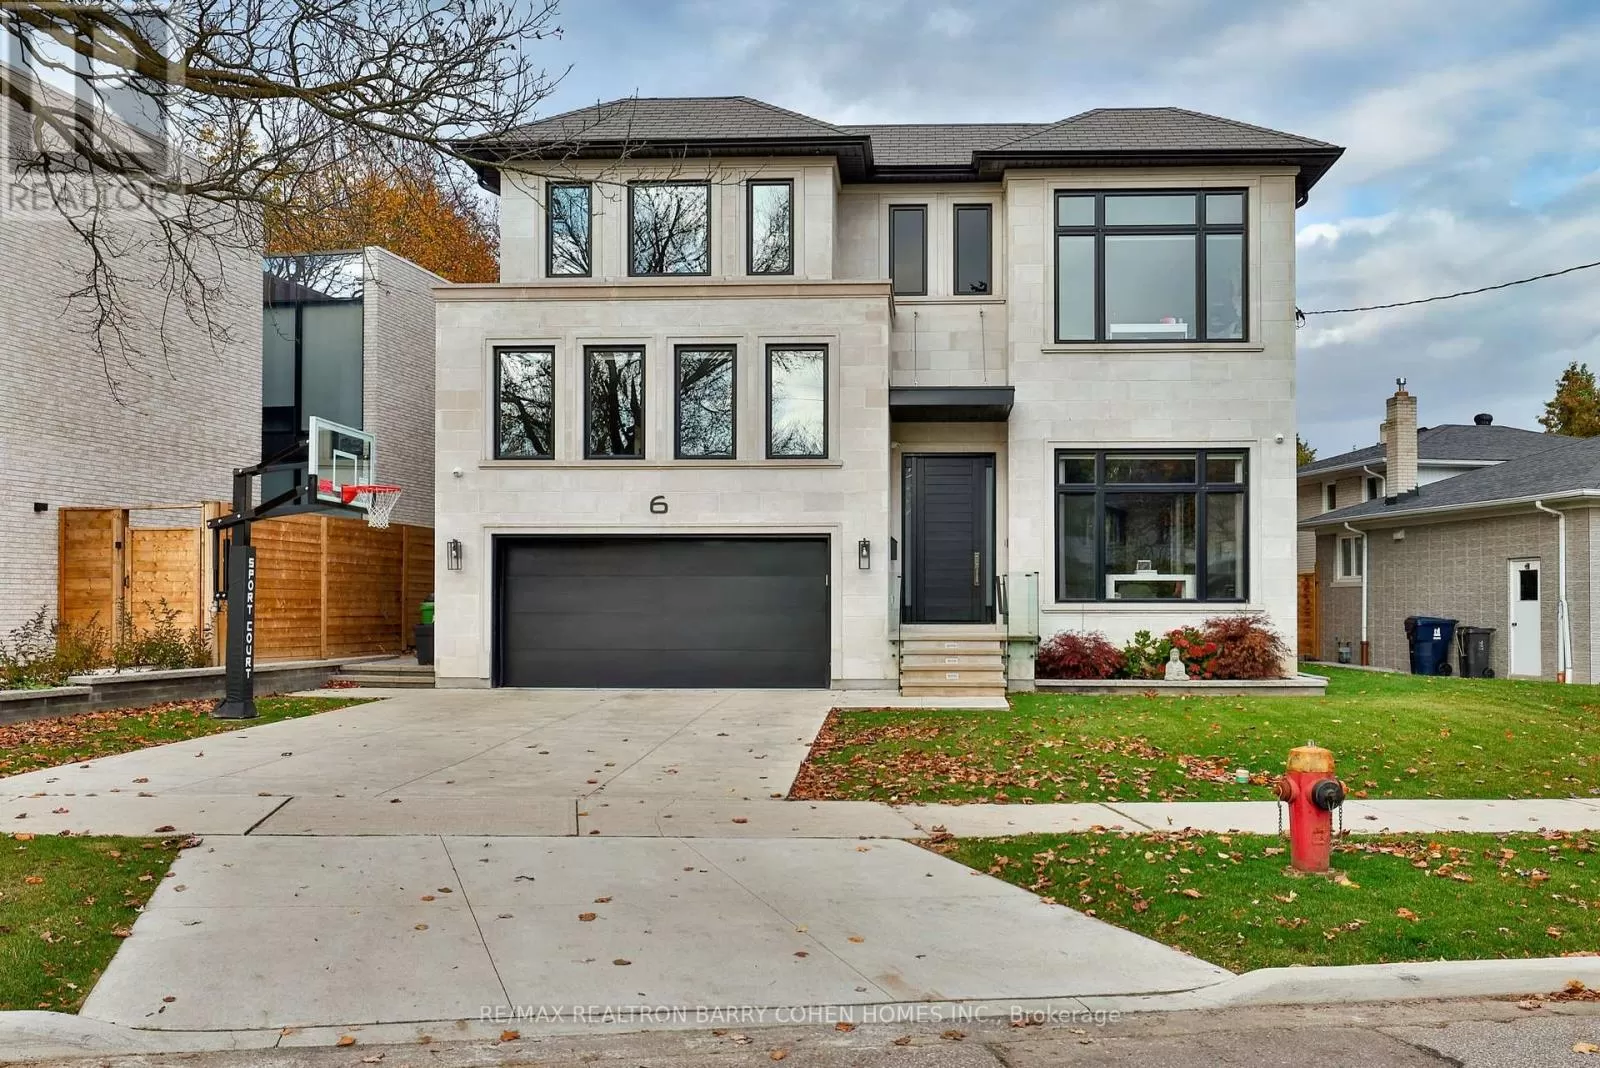 House for rent: 6 Stubbs Drive, Toronto, Ontario M2L 2R1